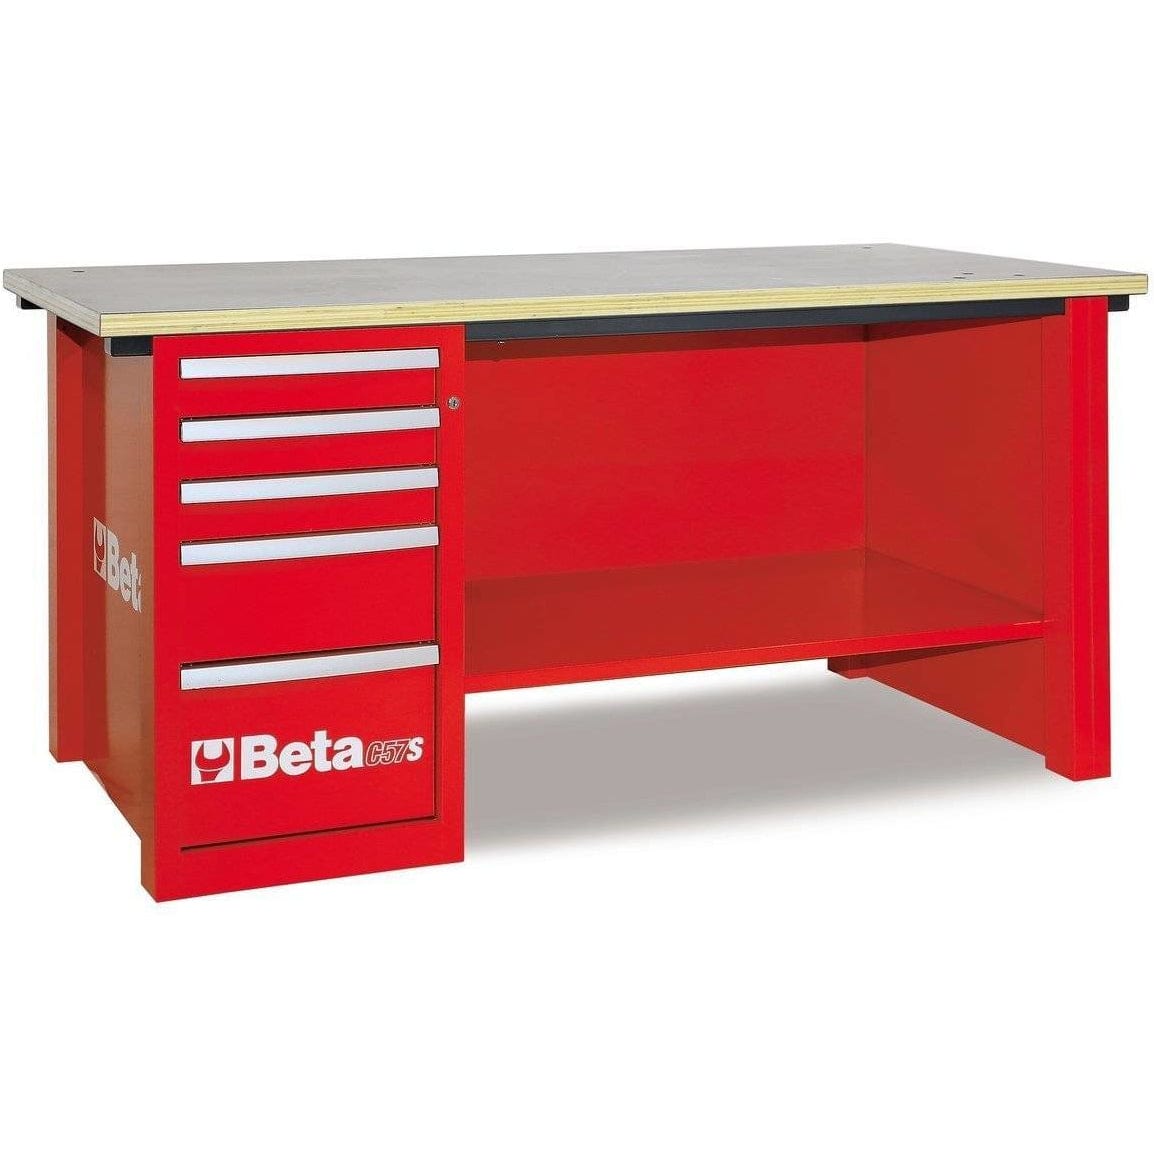 Beta Tools C57S D/R-MASTERCARGO WORKBENCH RED - Garage Tools Storage